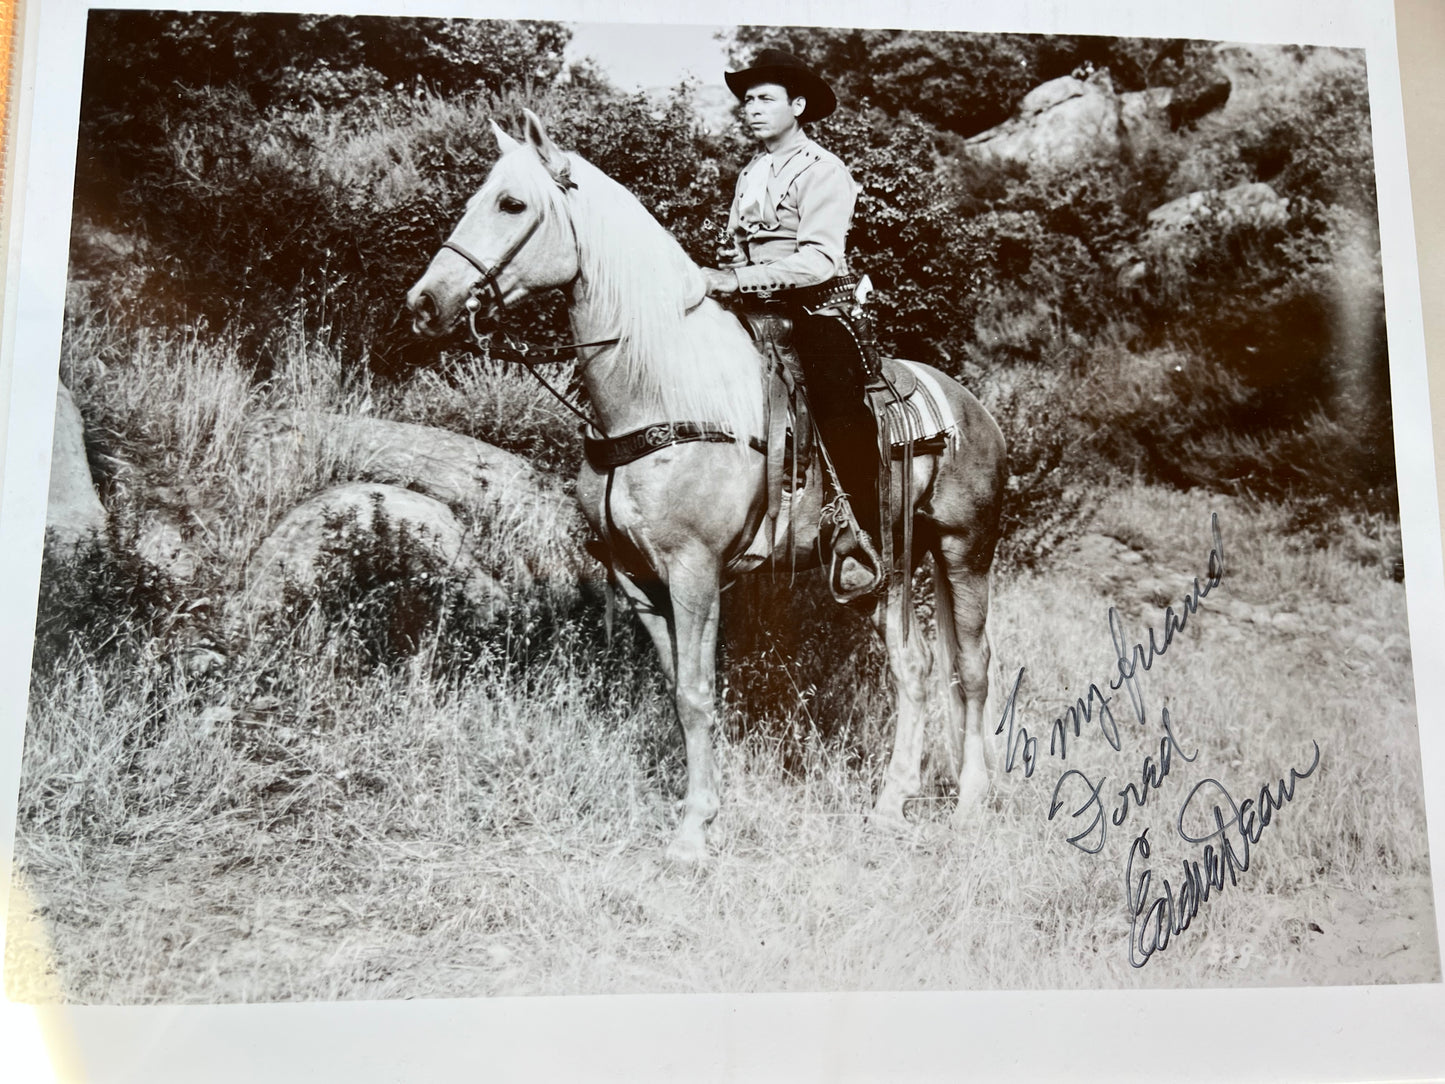 EDDIE DEAN, cowboy star, autograph